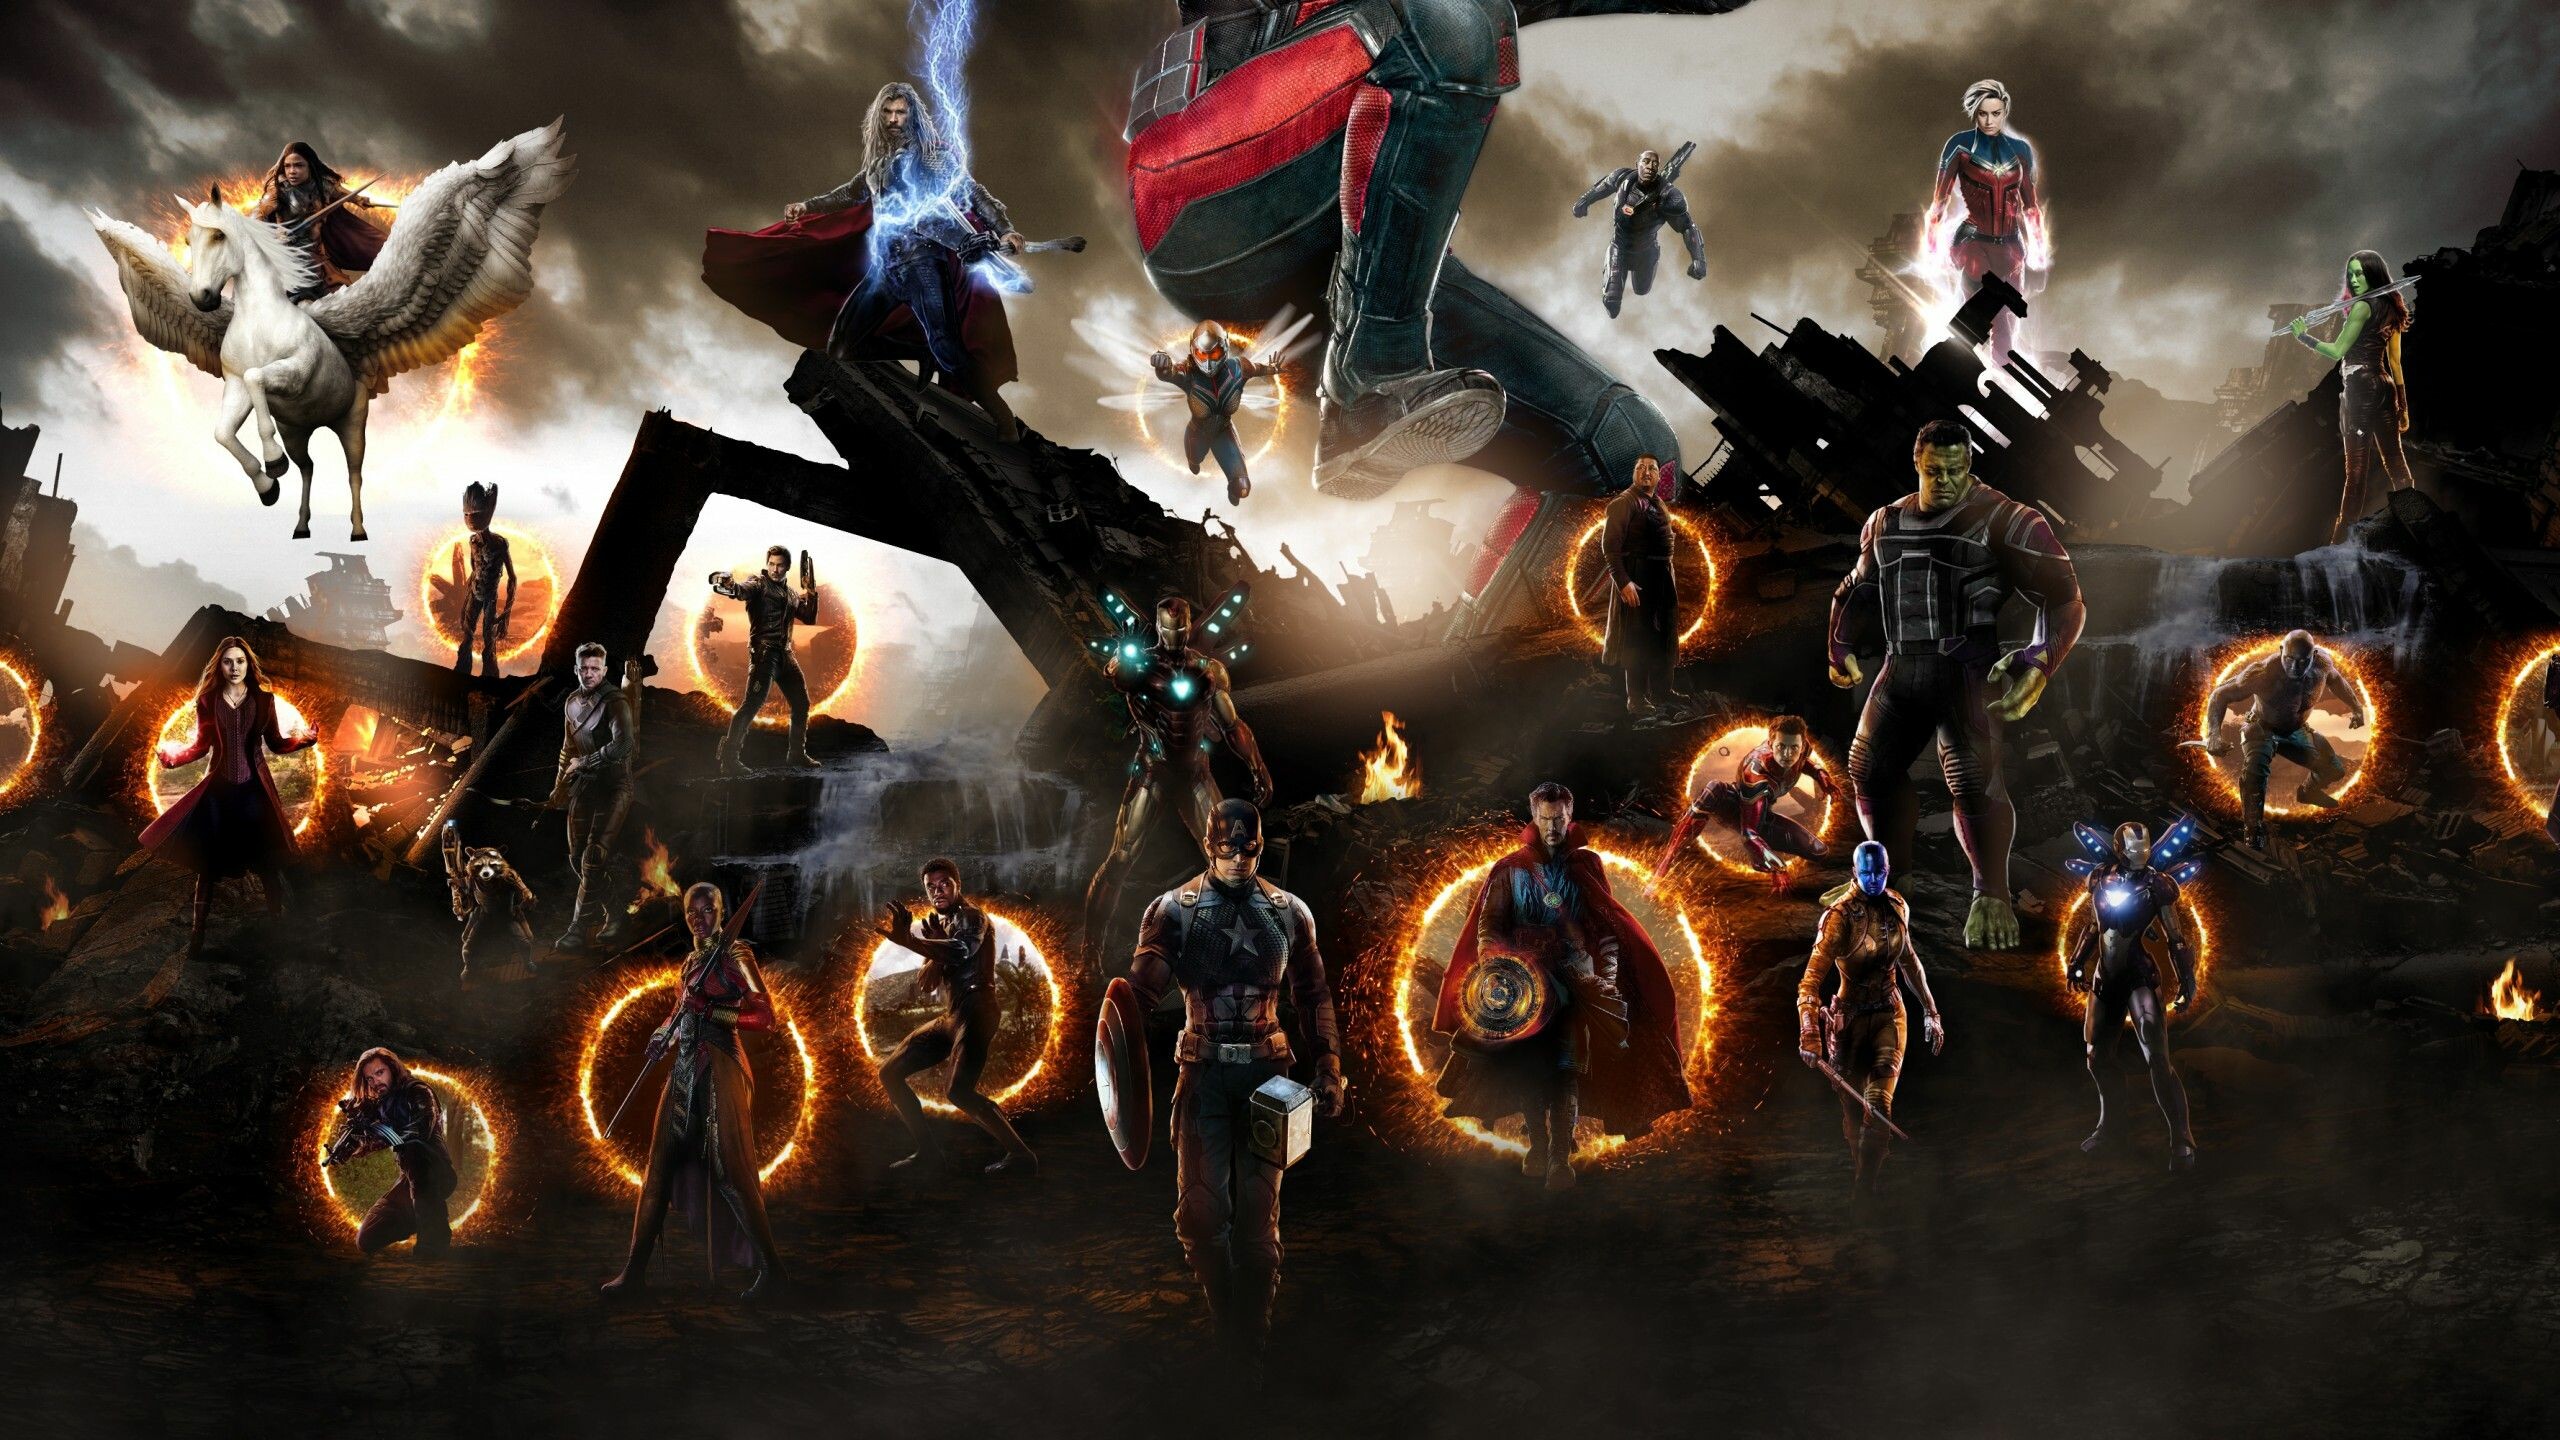 Avengers: The original team consisted of Iron Man, Captain America, Hulk, Thor, Black Widow, and Hawkeye. 2560x1440 HD Wallpaper.